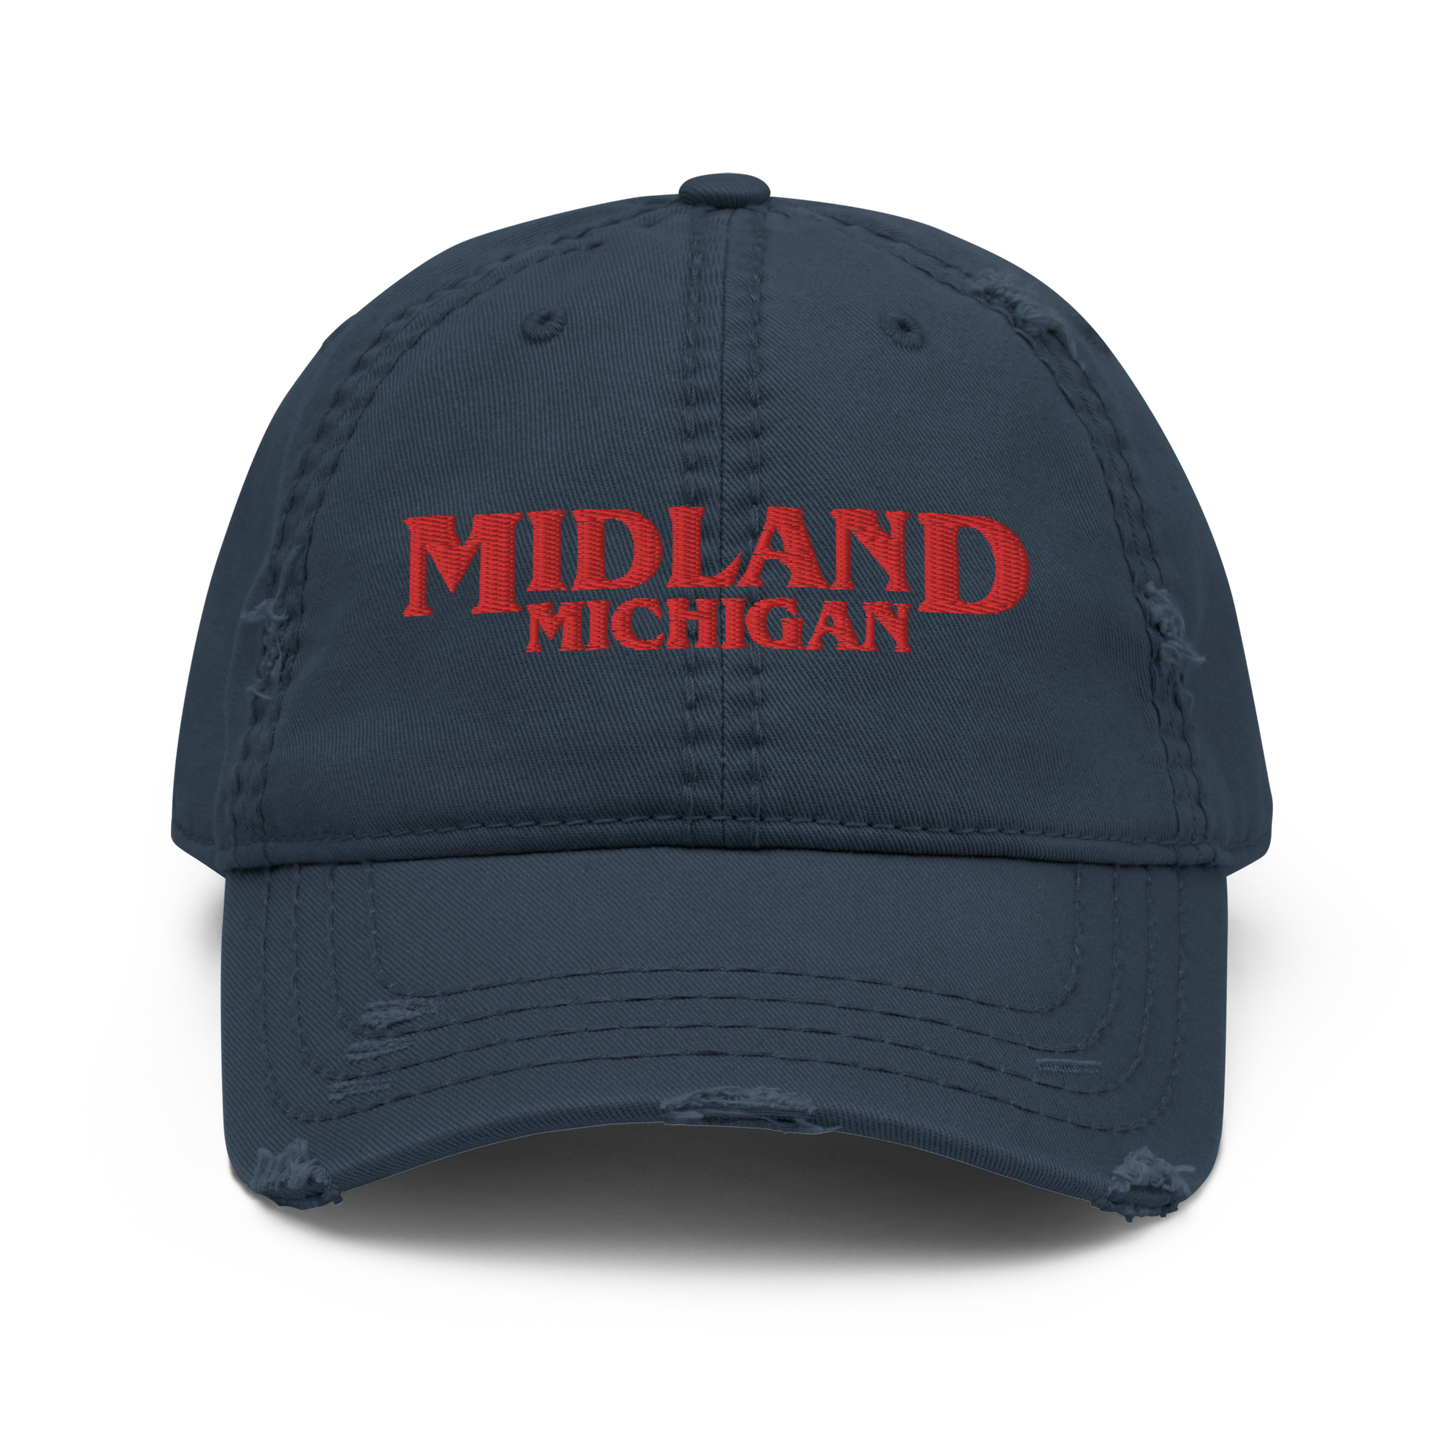 'Midland Michigan' Distressed Dad Hat (1980s Drama Parody)